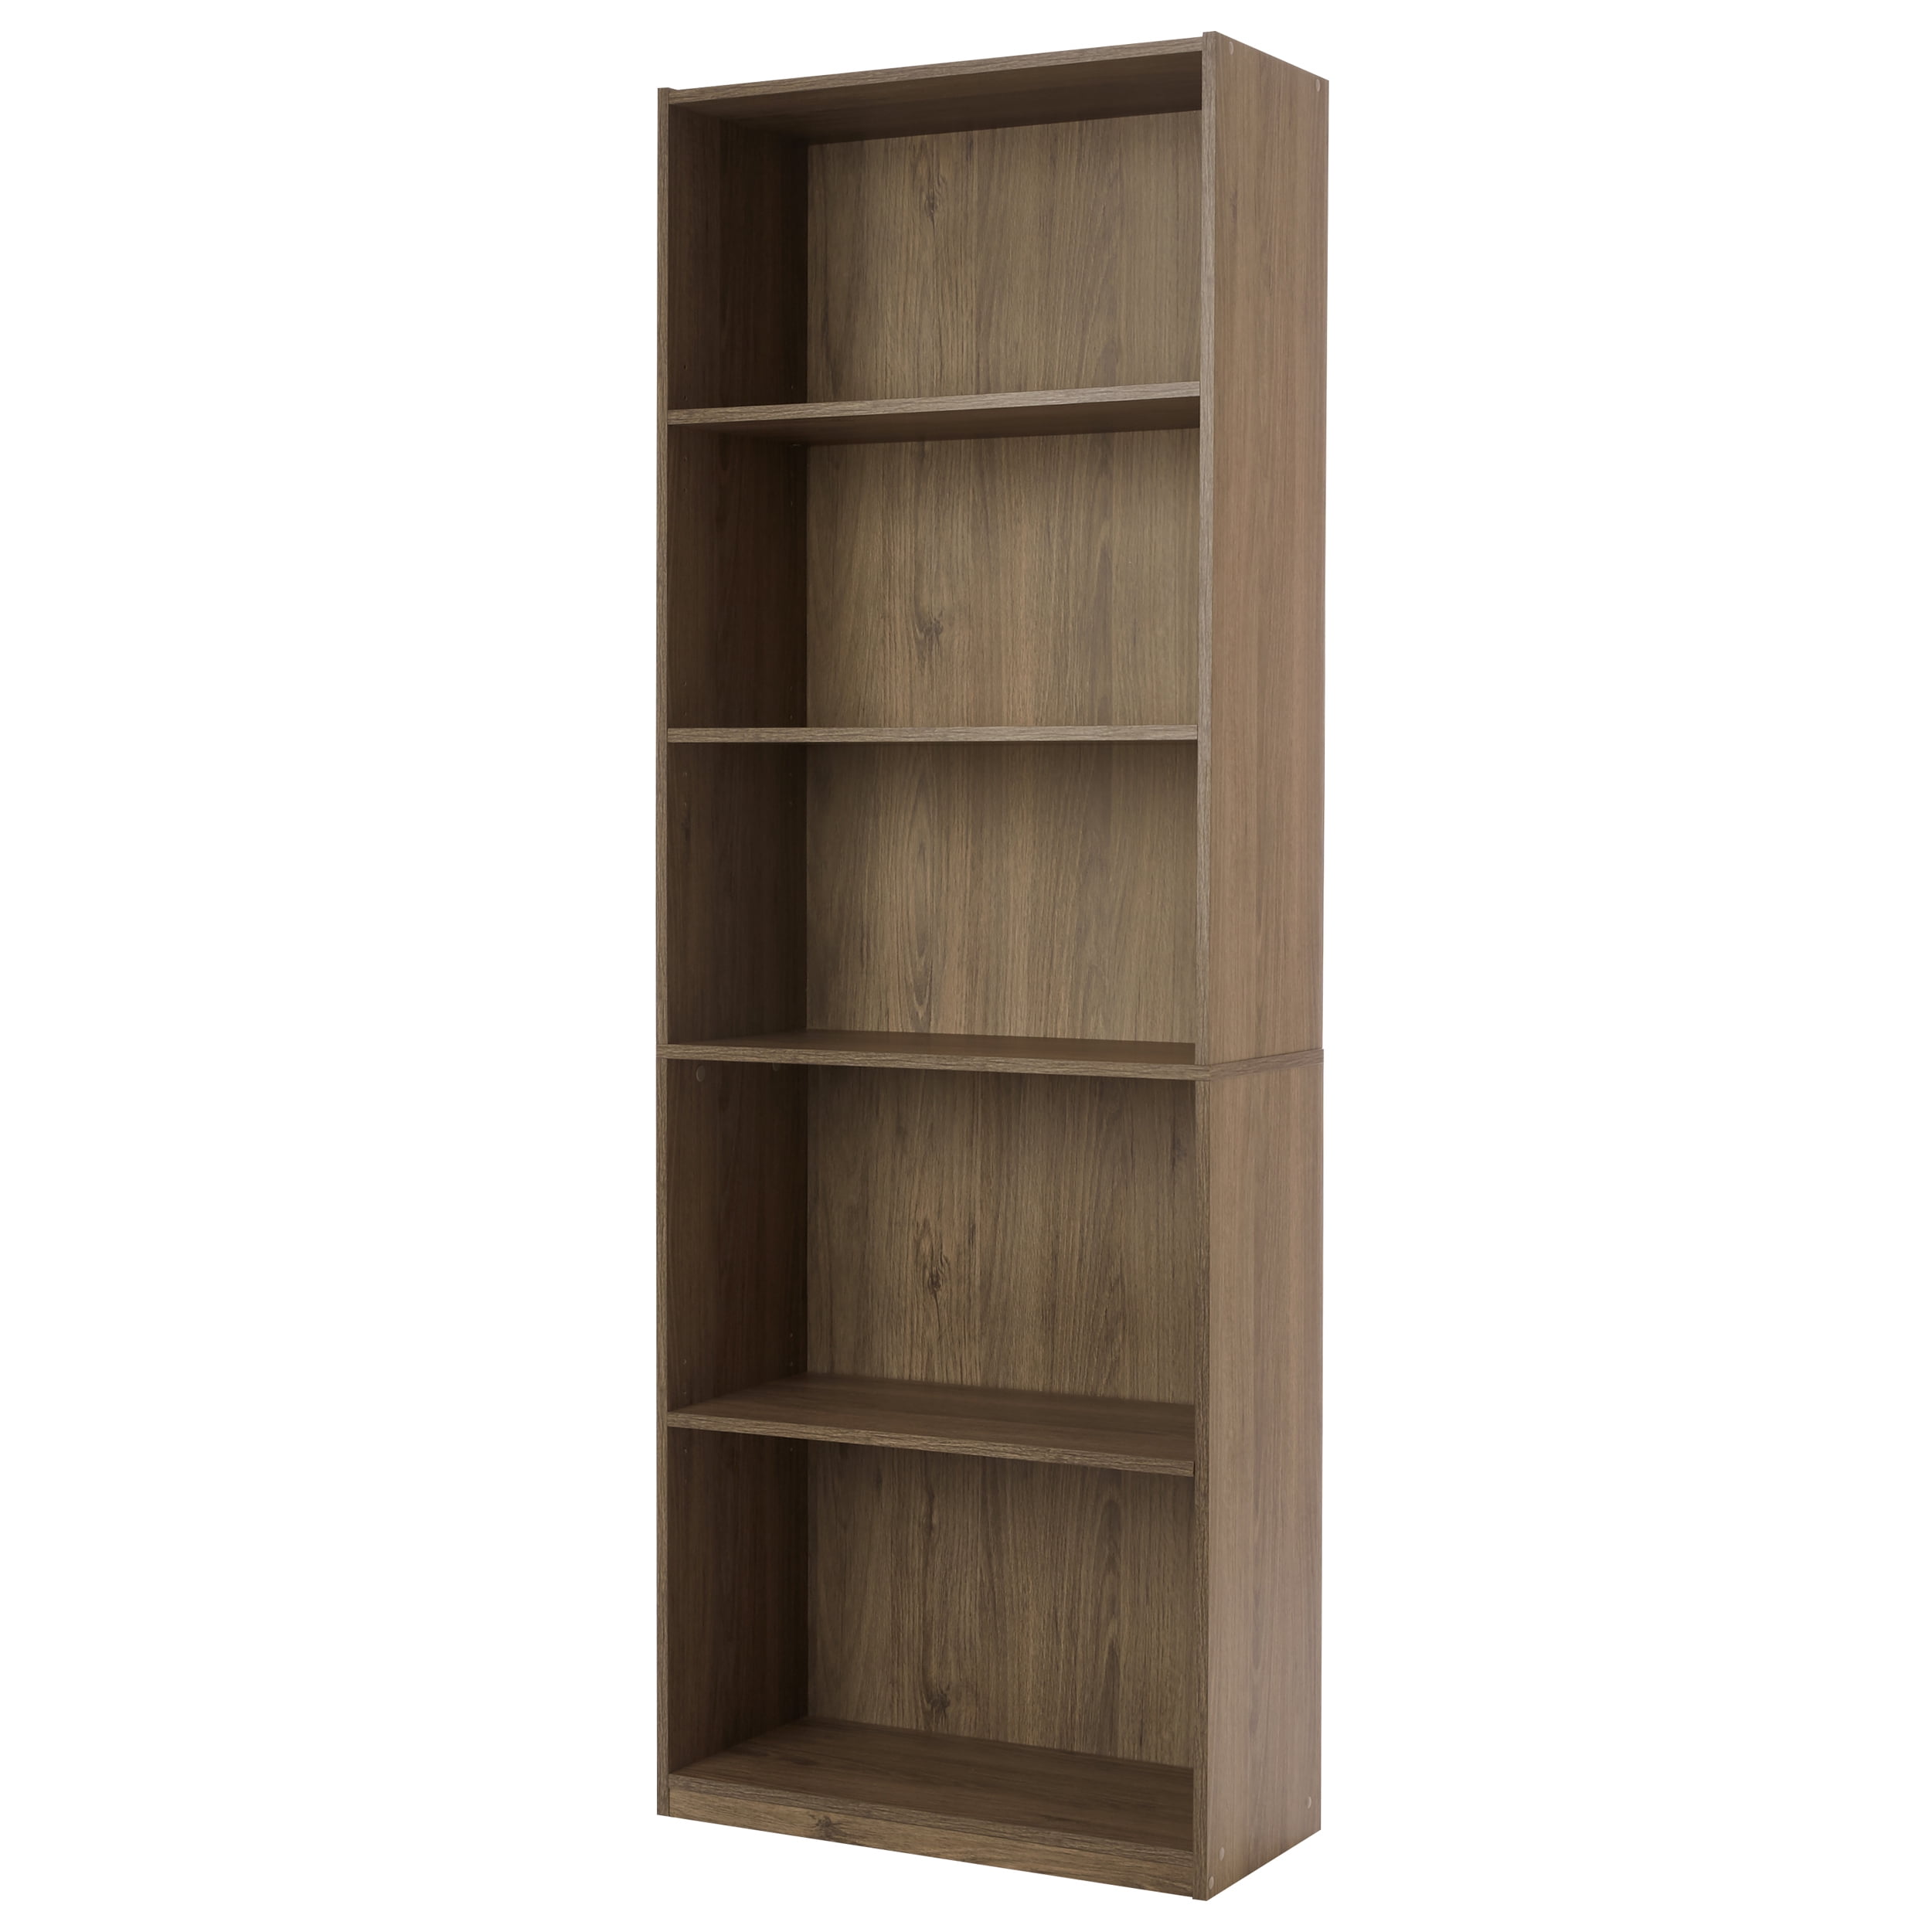 Details about   71" Tall Wood 5 Shelf Bookcase Sturdy Closed Back Storage Shelves Bookshelf Case 